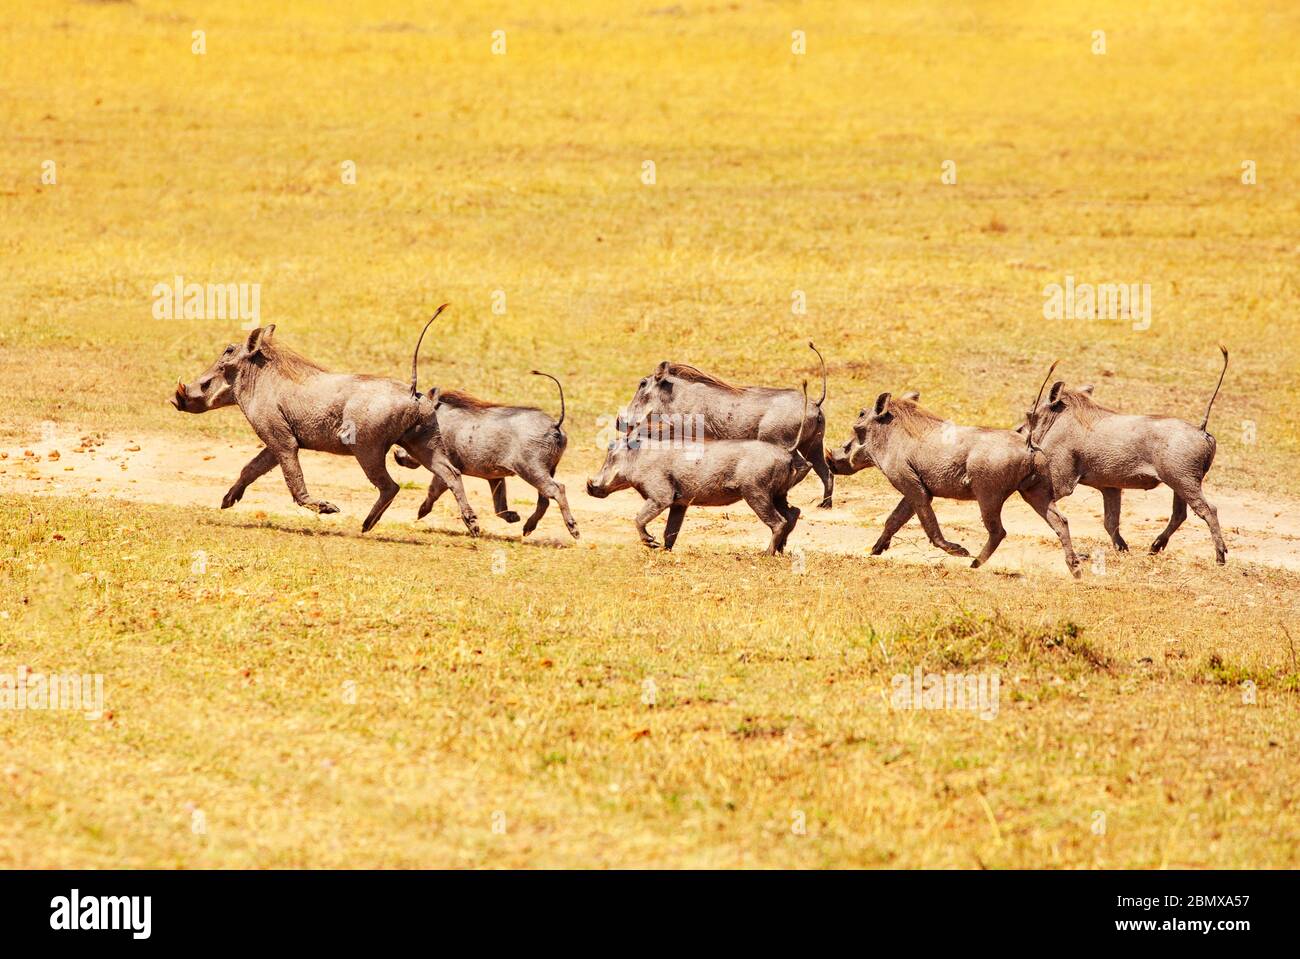 School of Phacochoerus known as warthogs pig family animal running in Kenya savanna, Africa Stock Photo